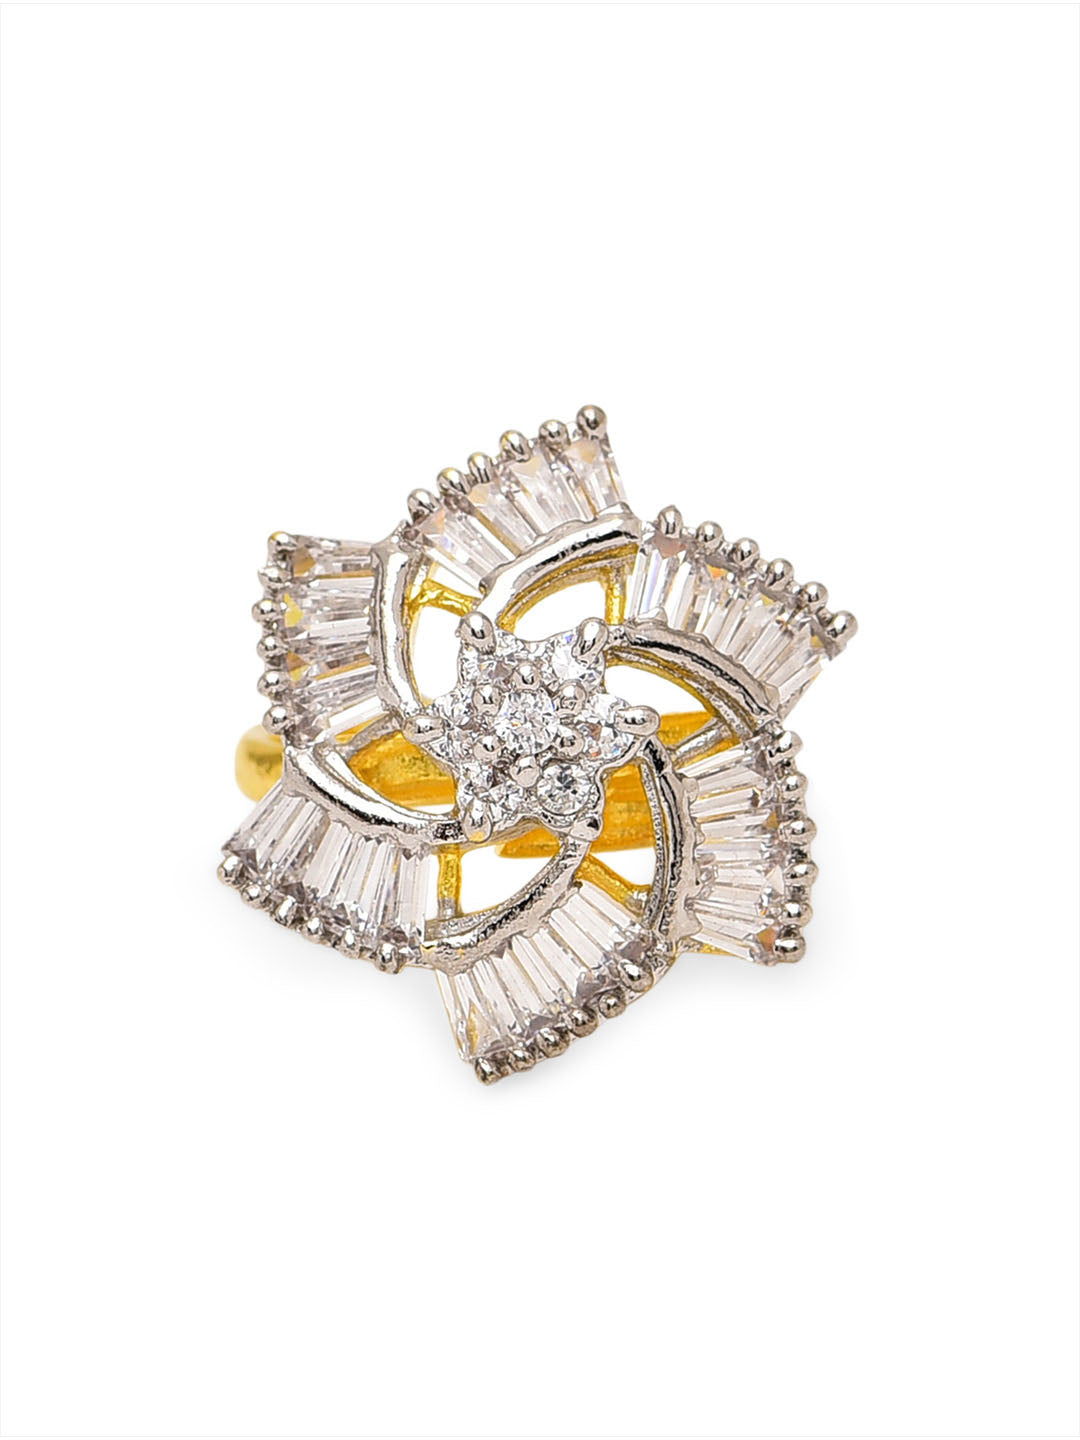 Designer American Diamond Ring